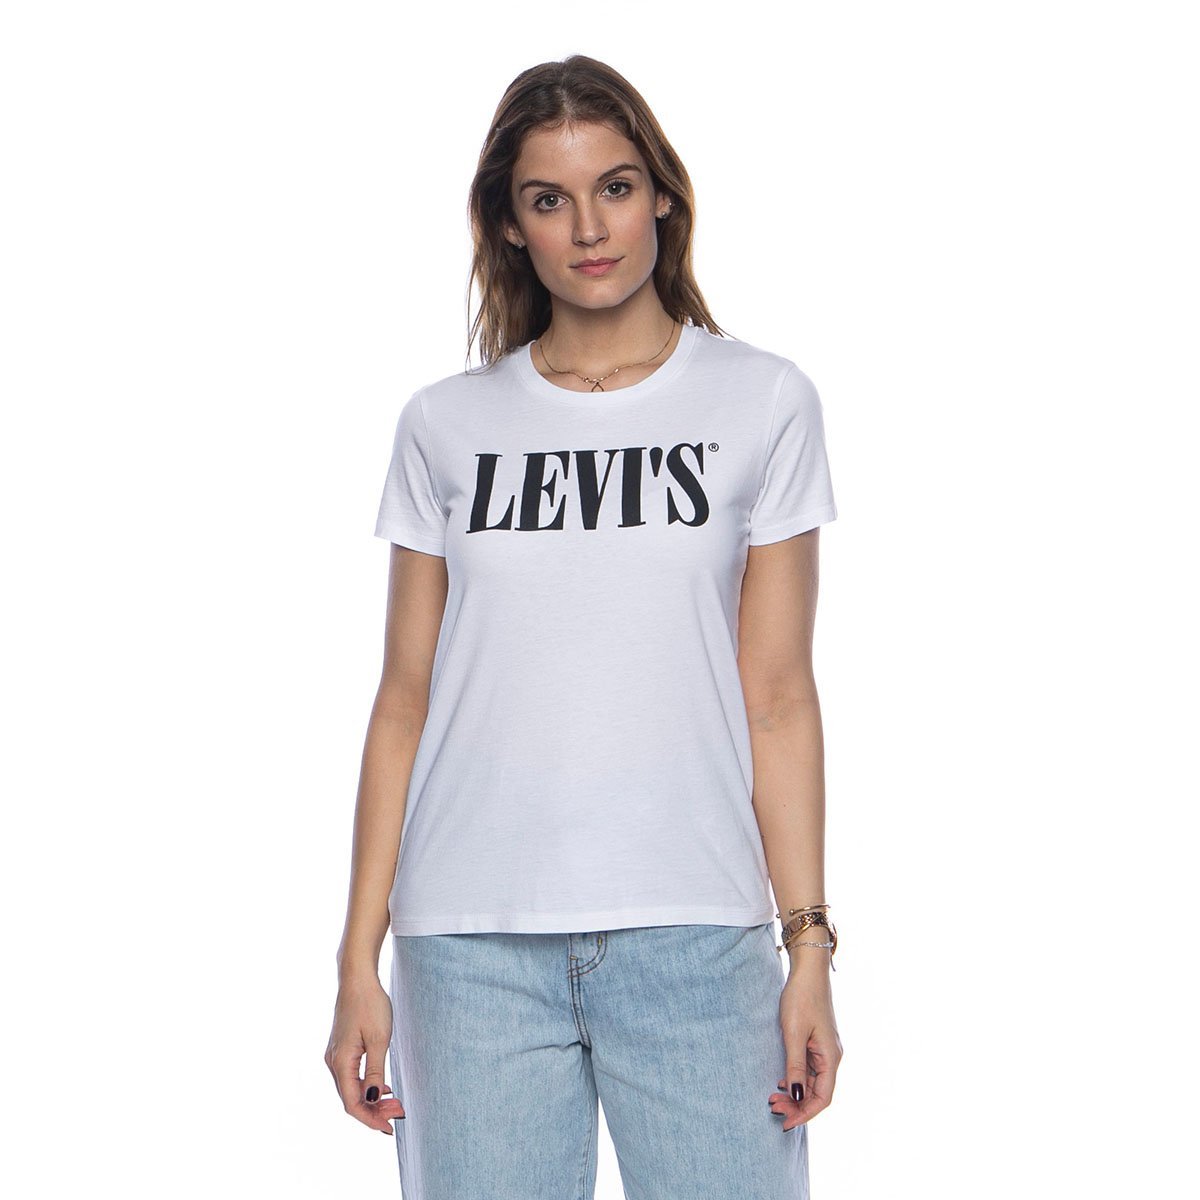 levi's black and white shirt